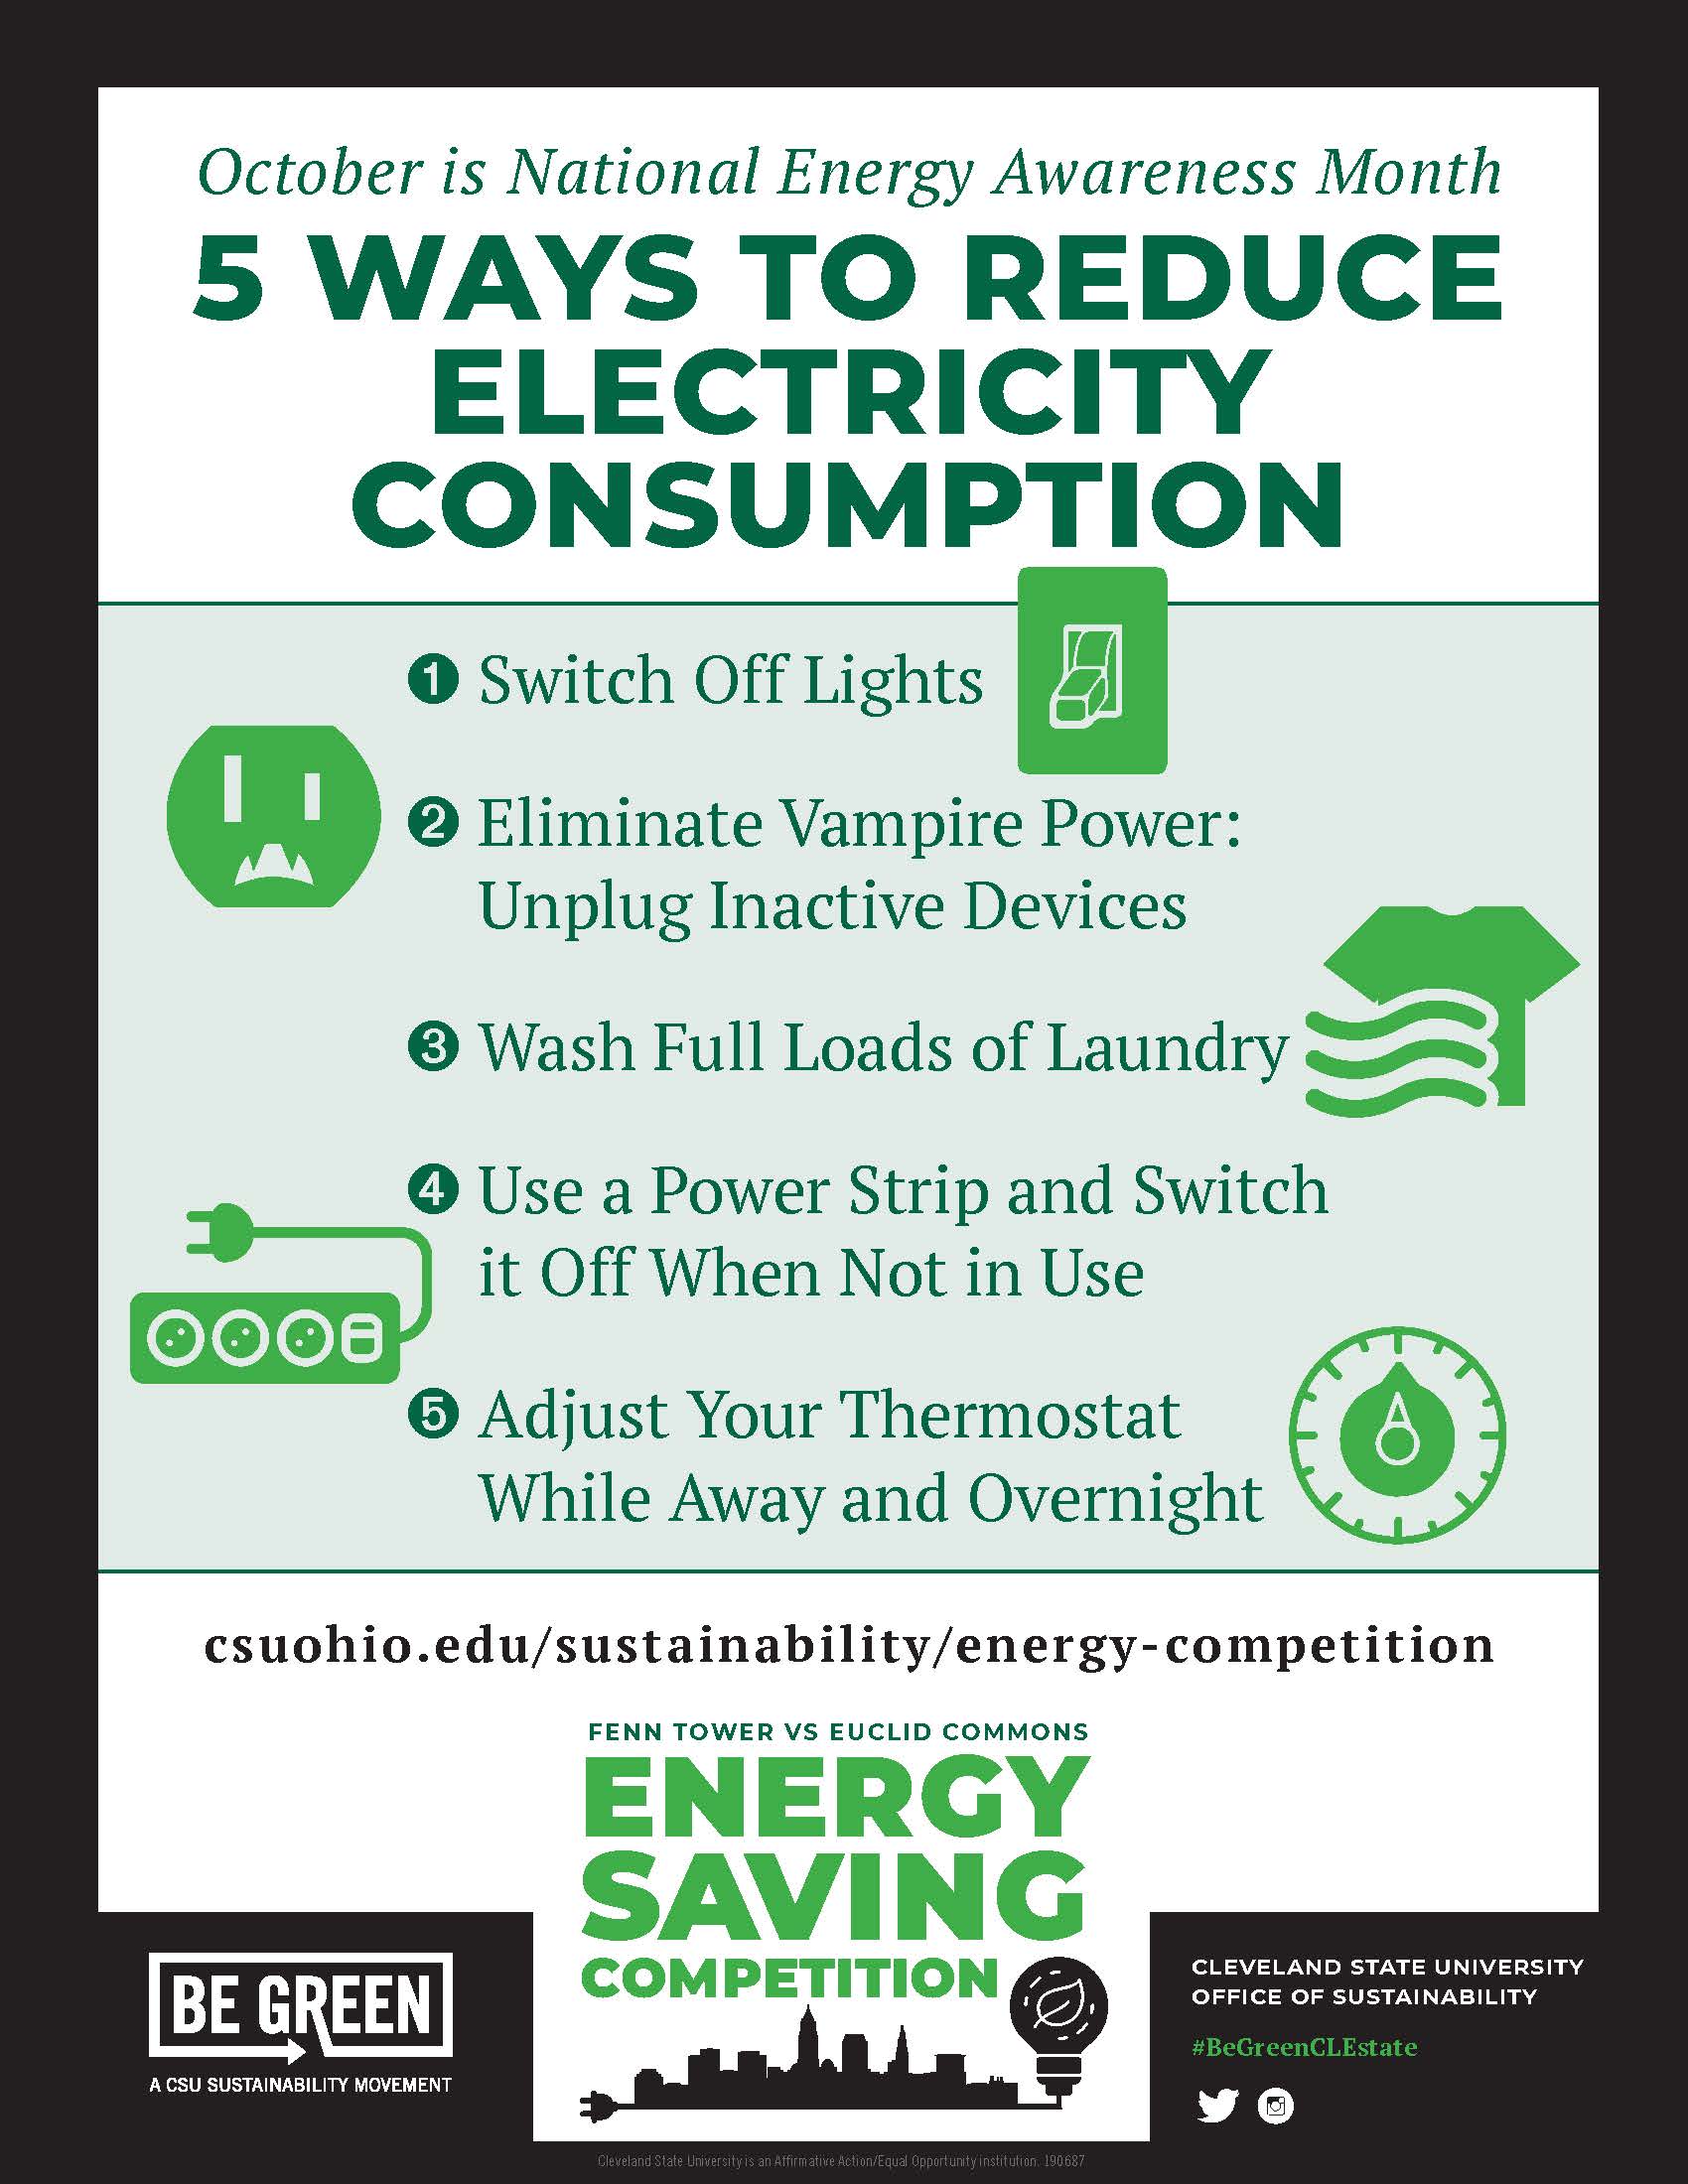 Dorm Energy Saving Tips